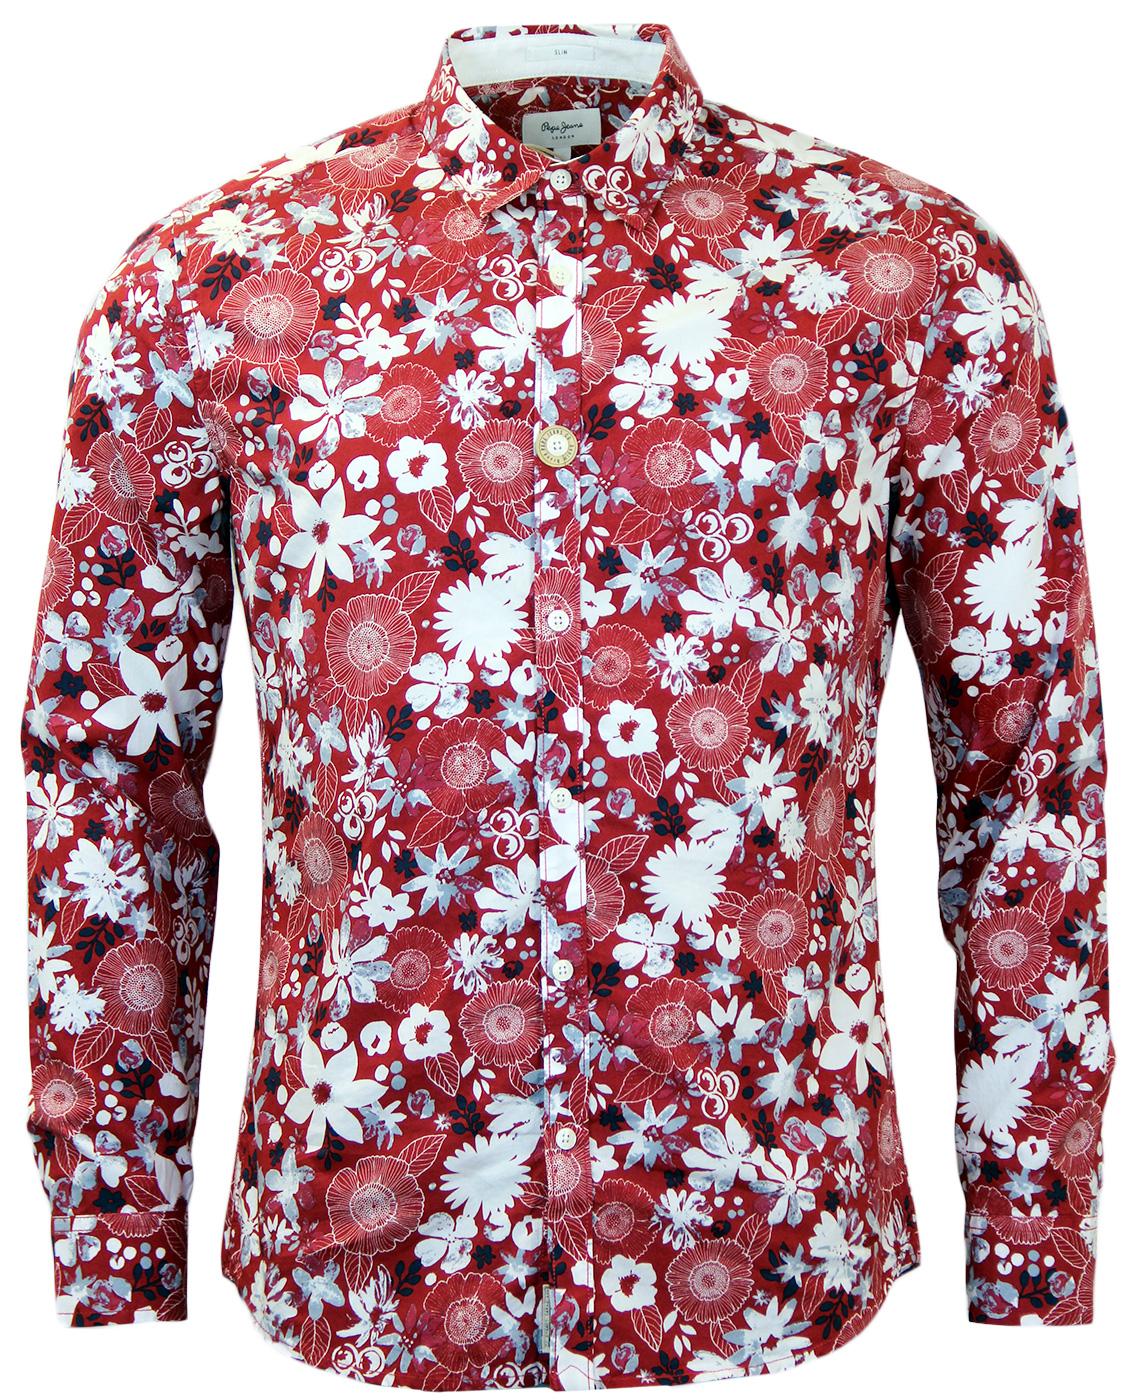 PEPE JEANS Pina Retro Mod Vibrant Floral Shirt in Brick